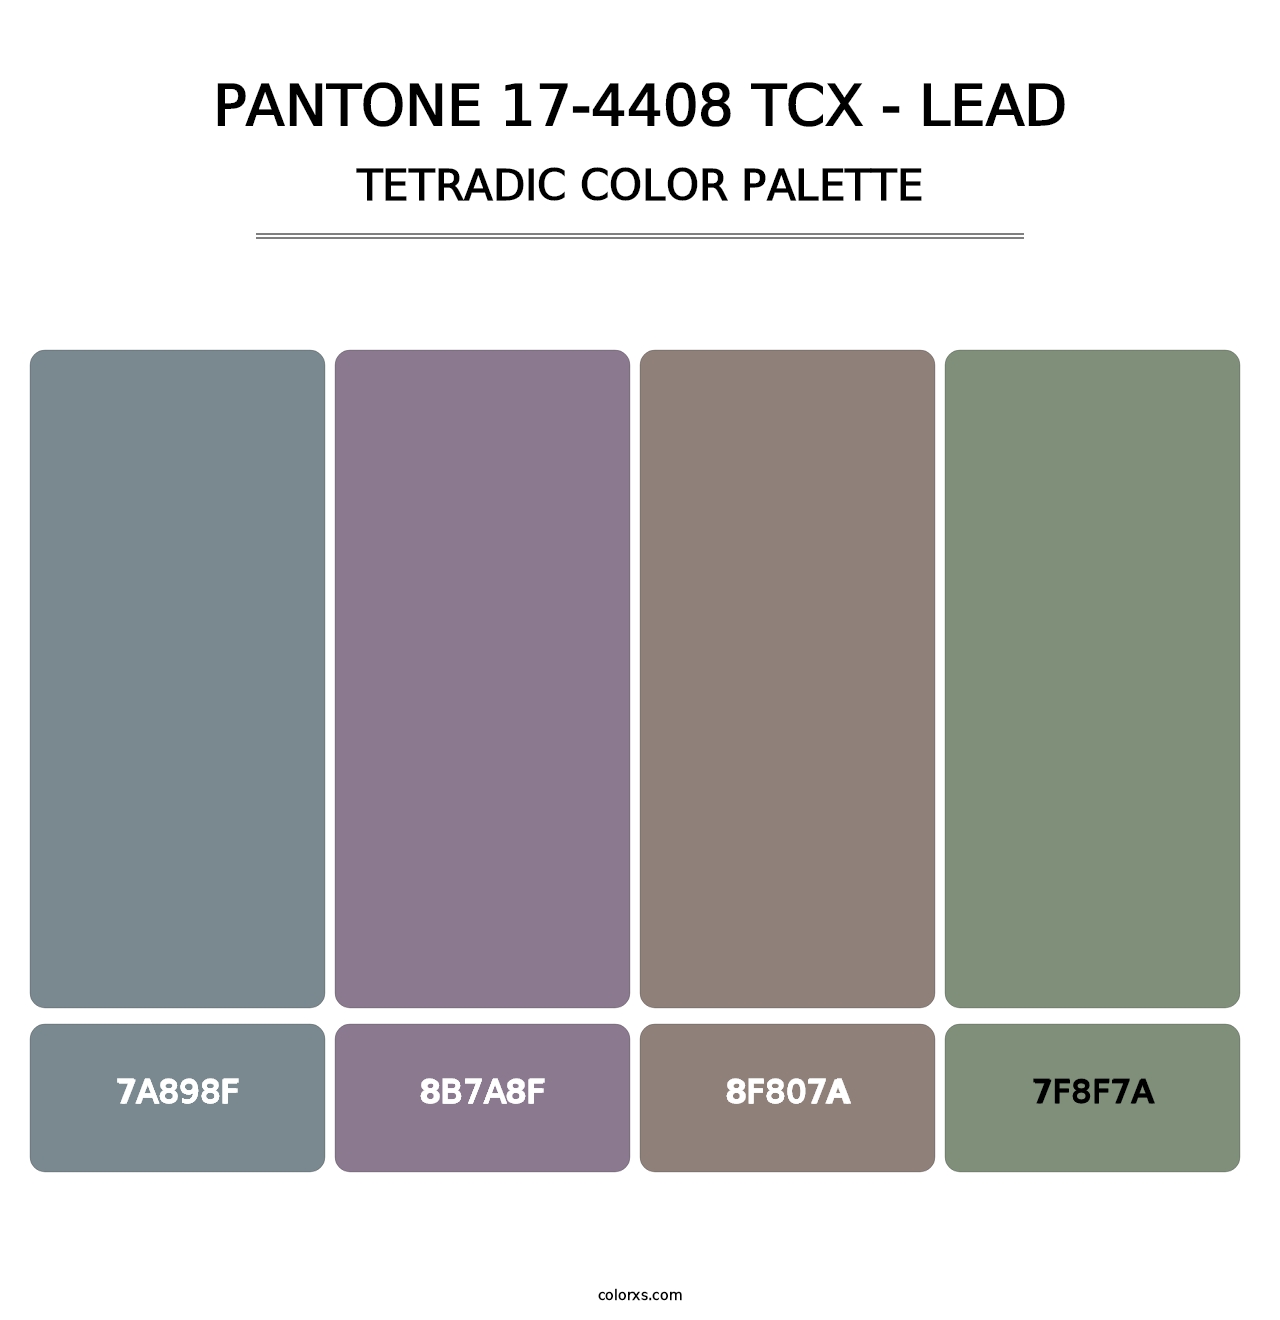 PANTONE 17-4408 TCX - Lead - Tetradic Color Palette